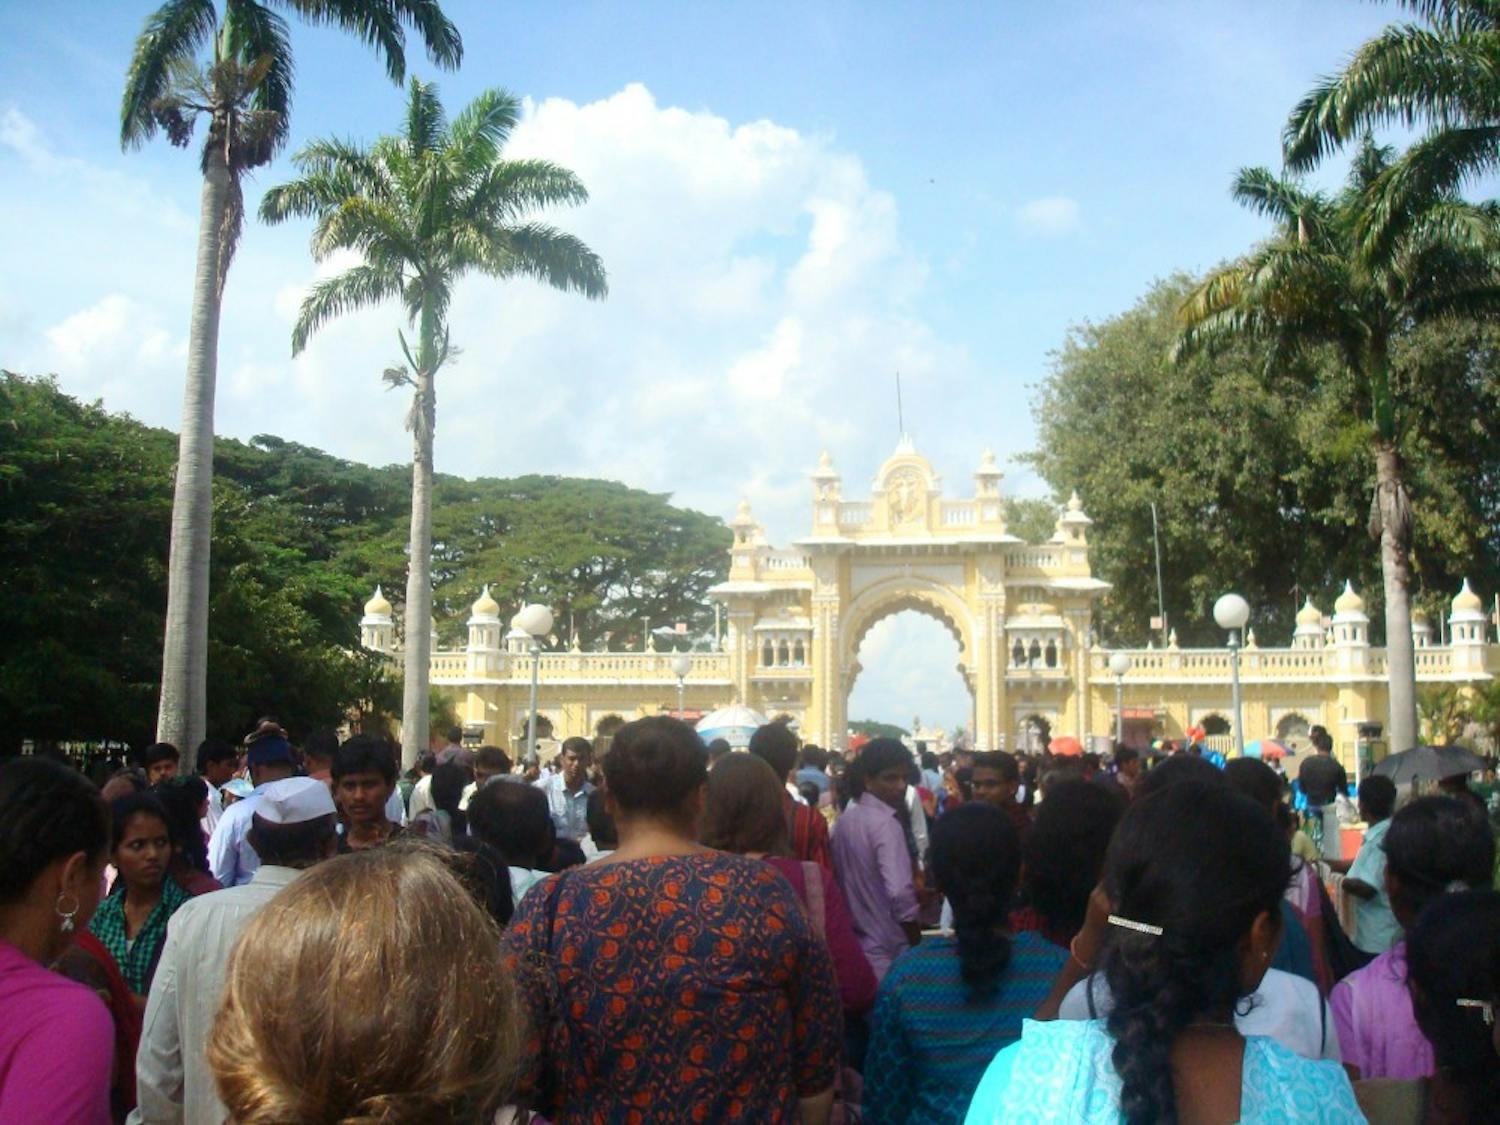 Outside the gate of Mysore Palace, India